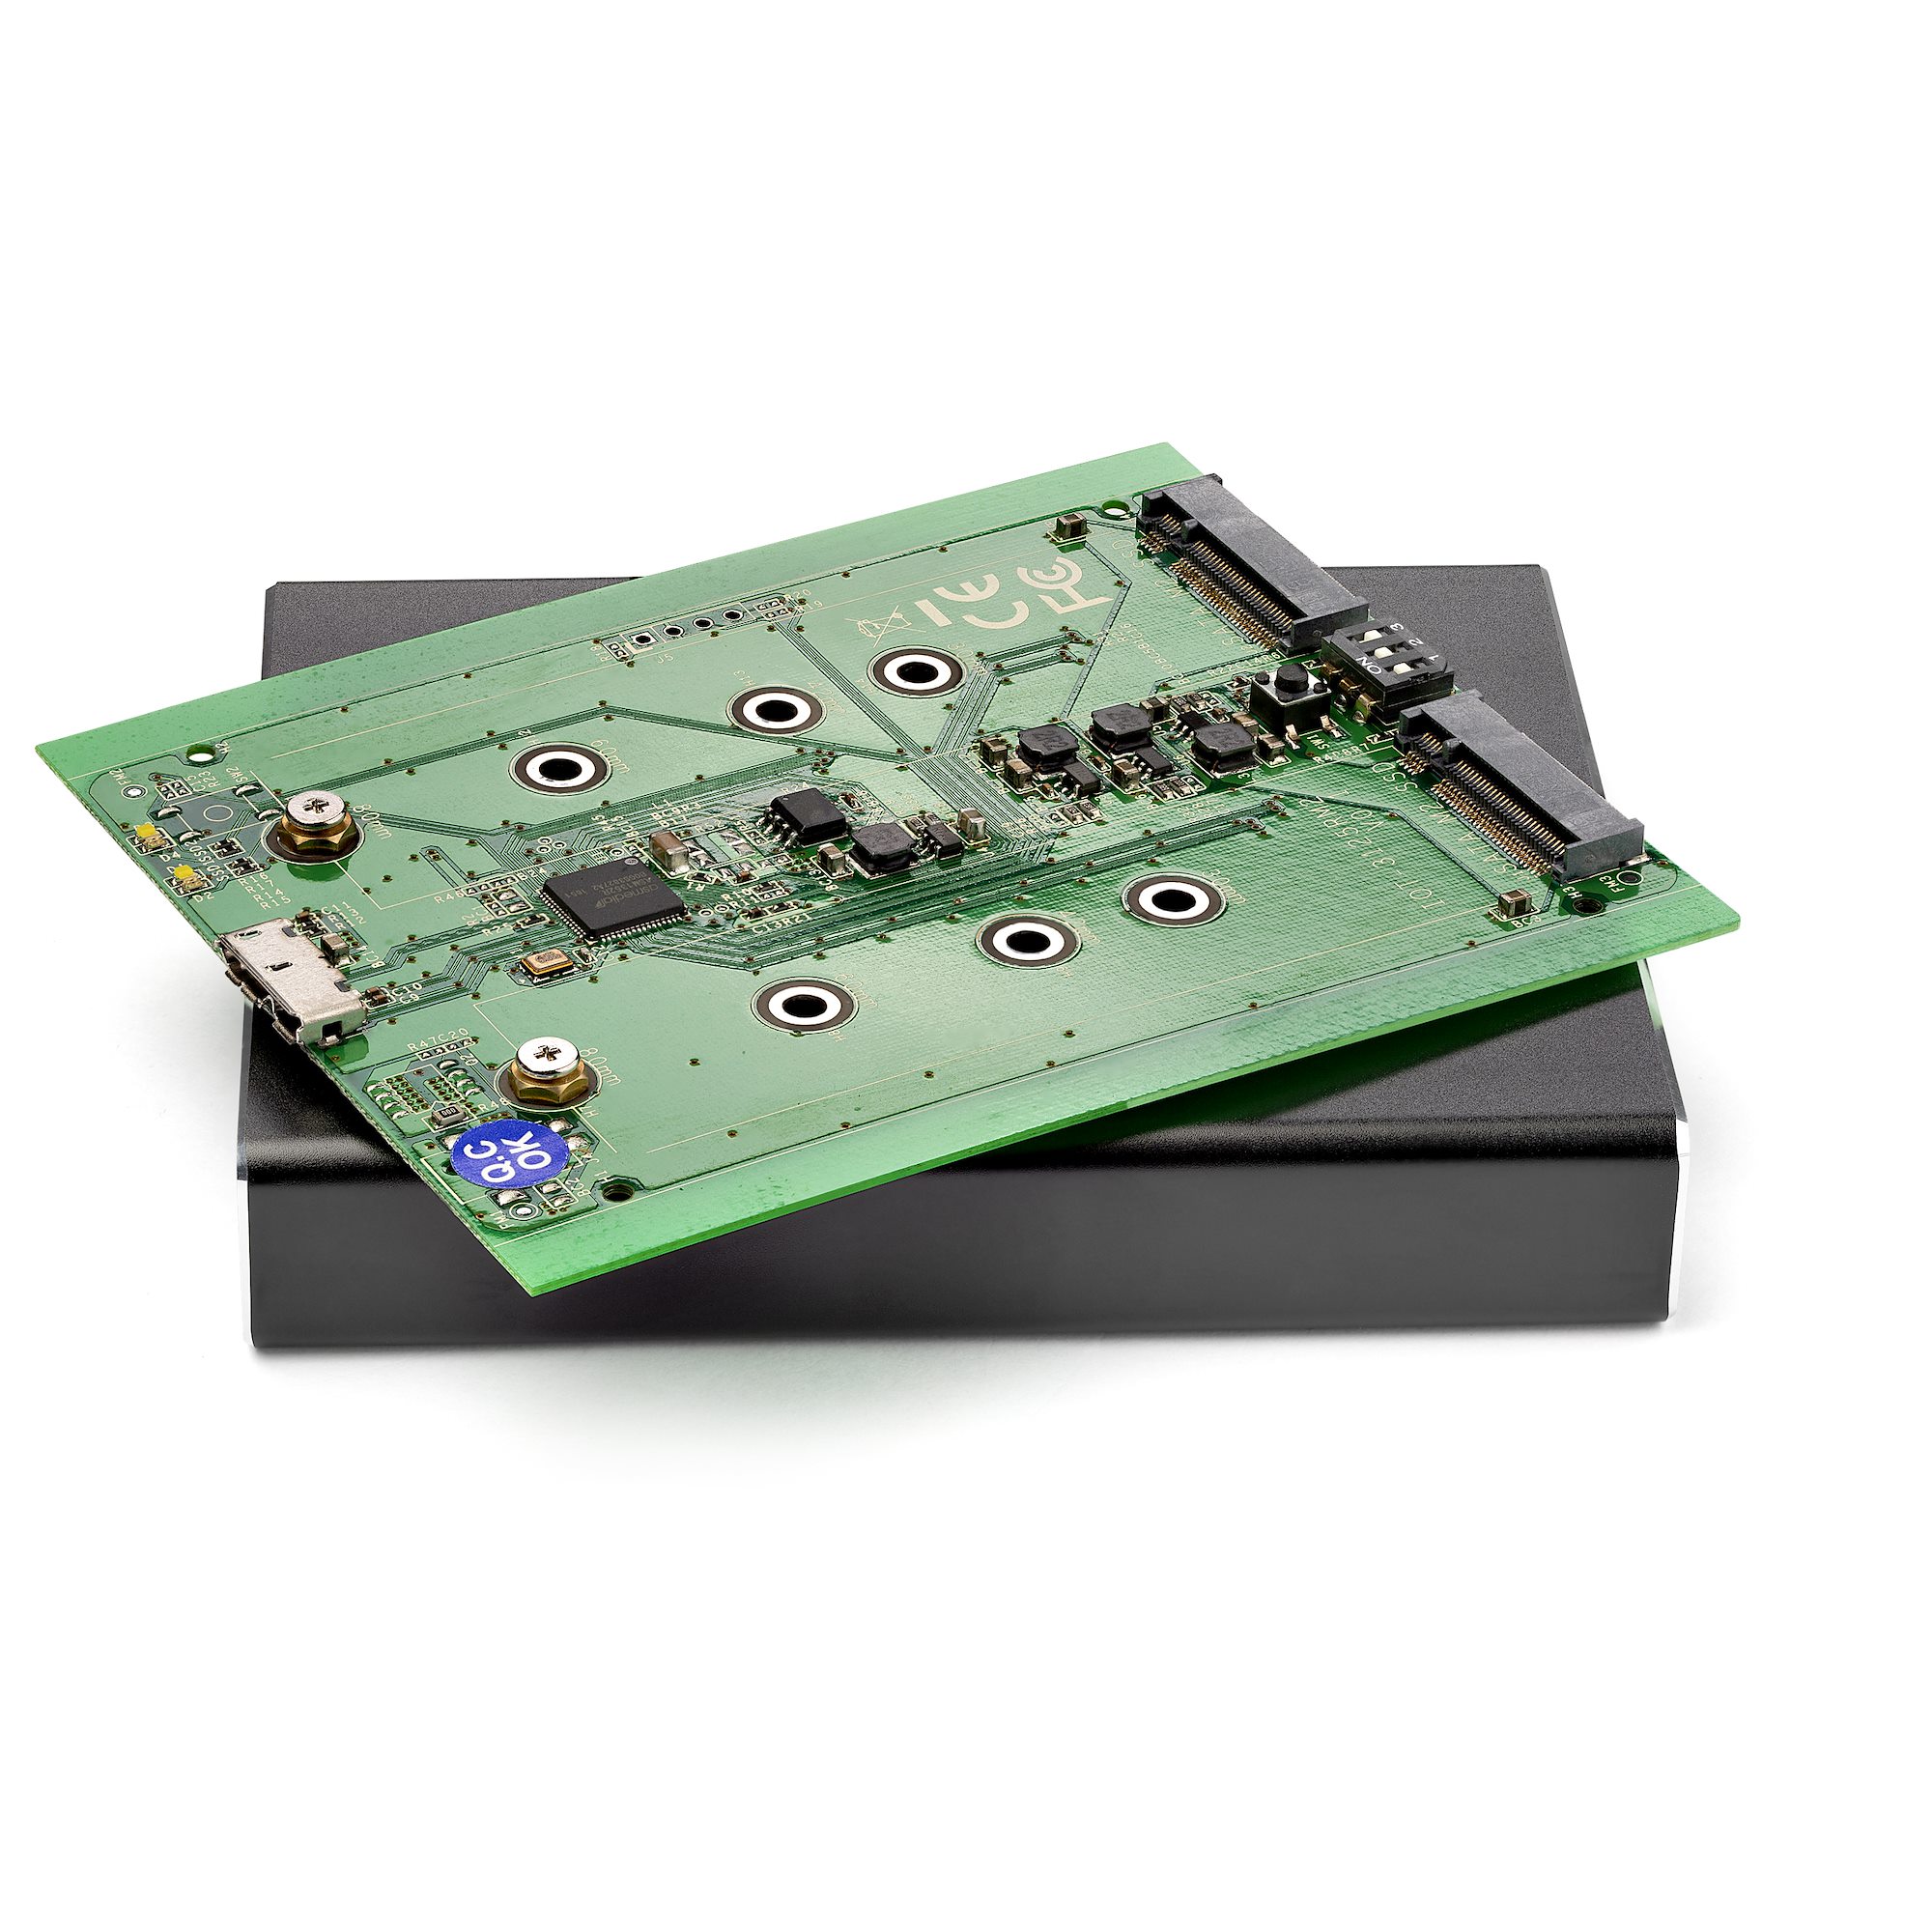 Shop  StarTech.com Dual M.2 SATA Adapter with RAID - 2x M.2 SSDs